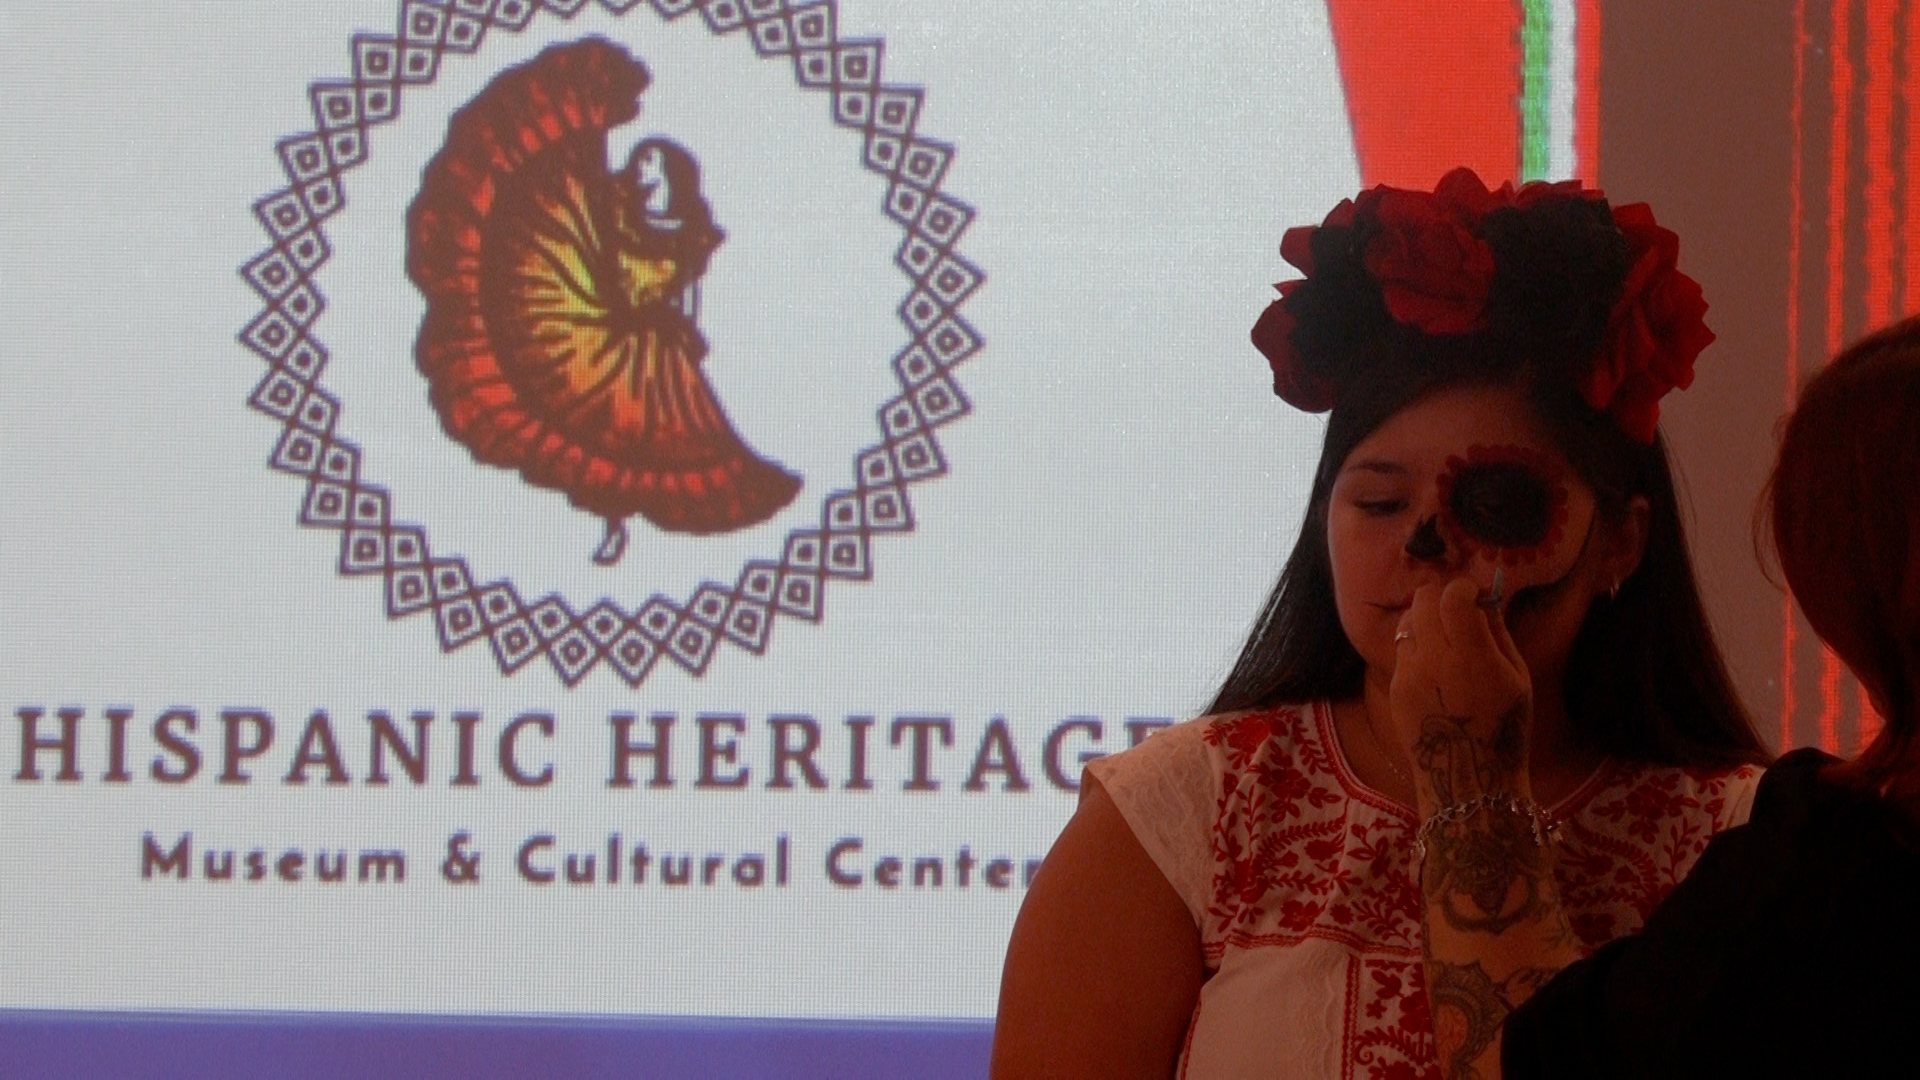 The San Angelo Hispanic Heritage Museum & Cultural Center offered a workshop to help prepare Dia De Los Muertos activities